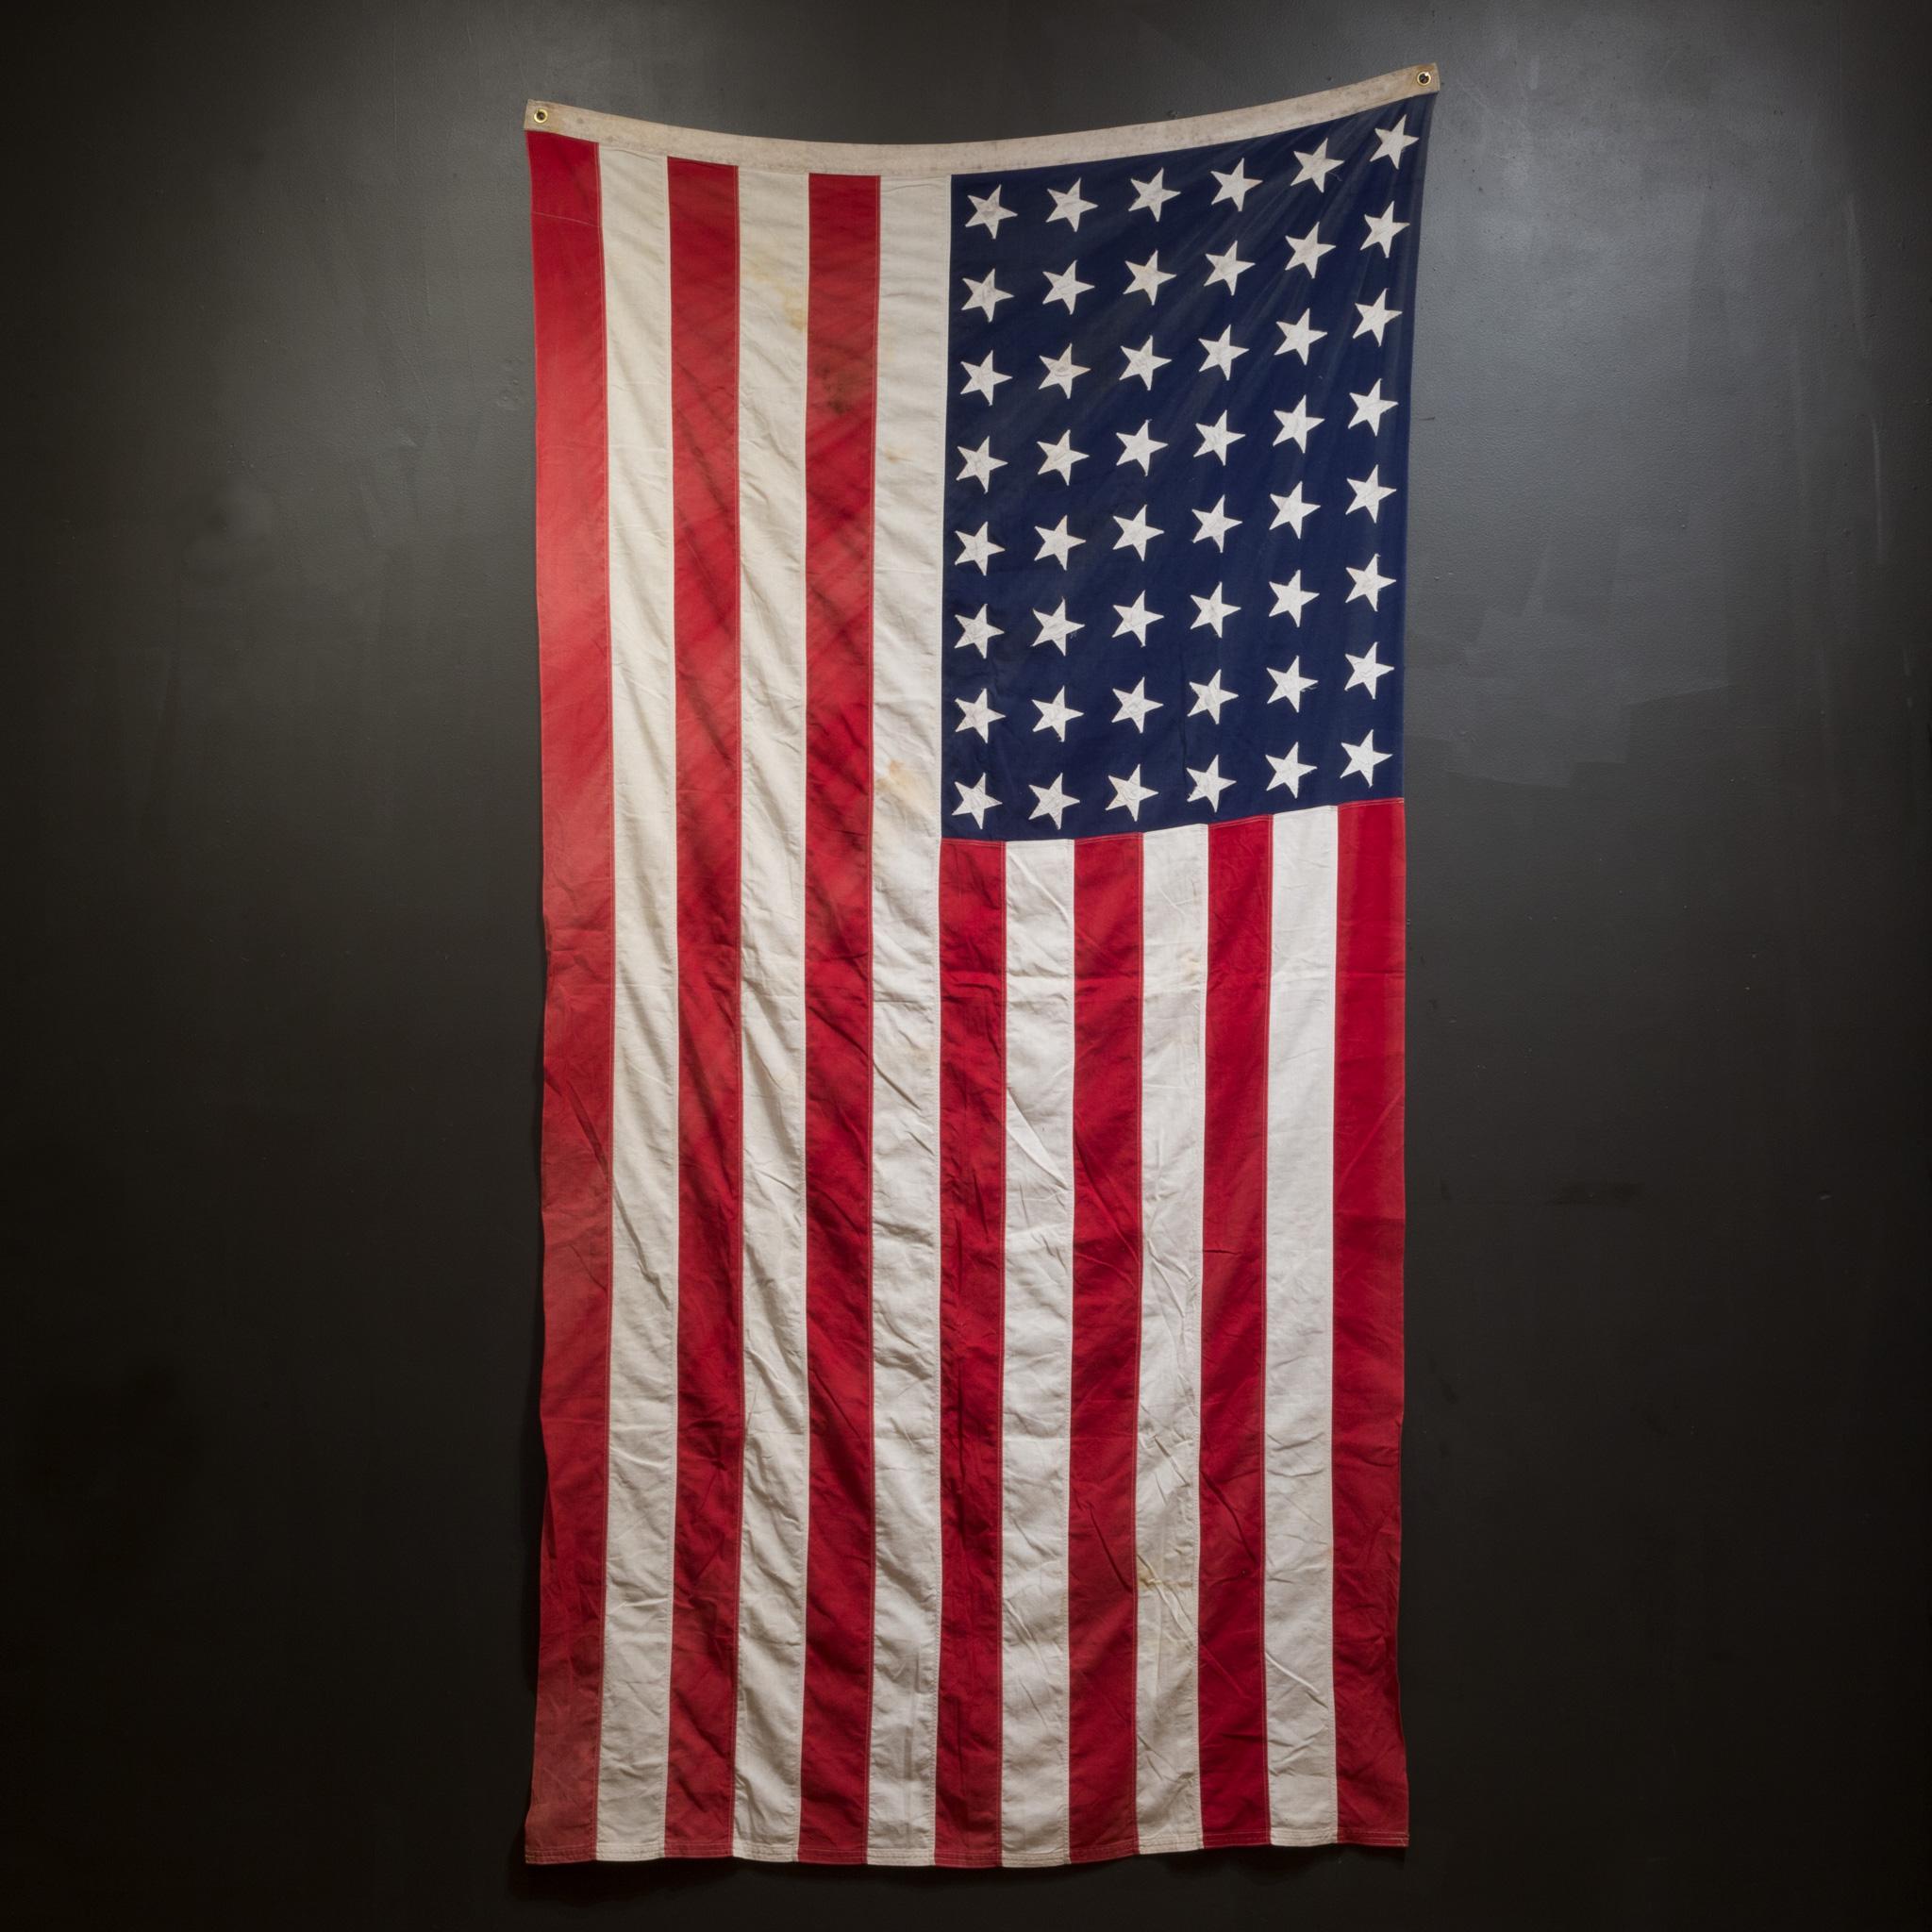 drapeau americain 48 etoiles